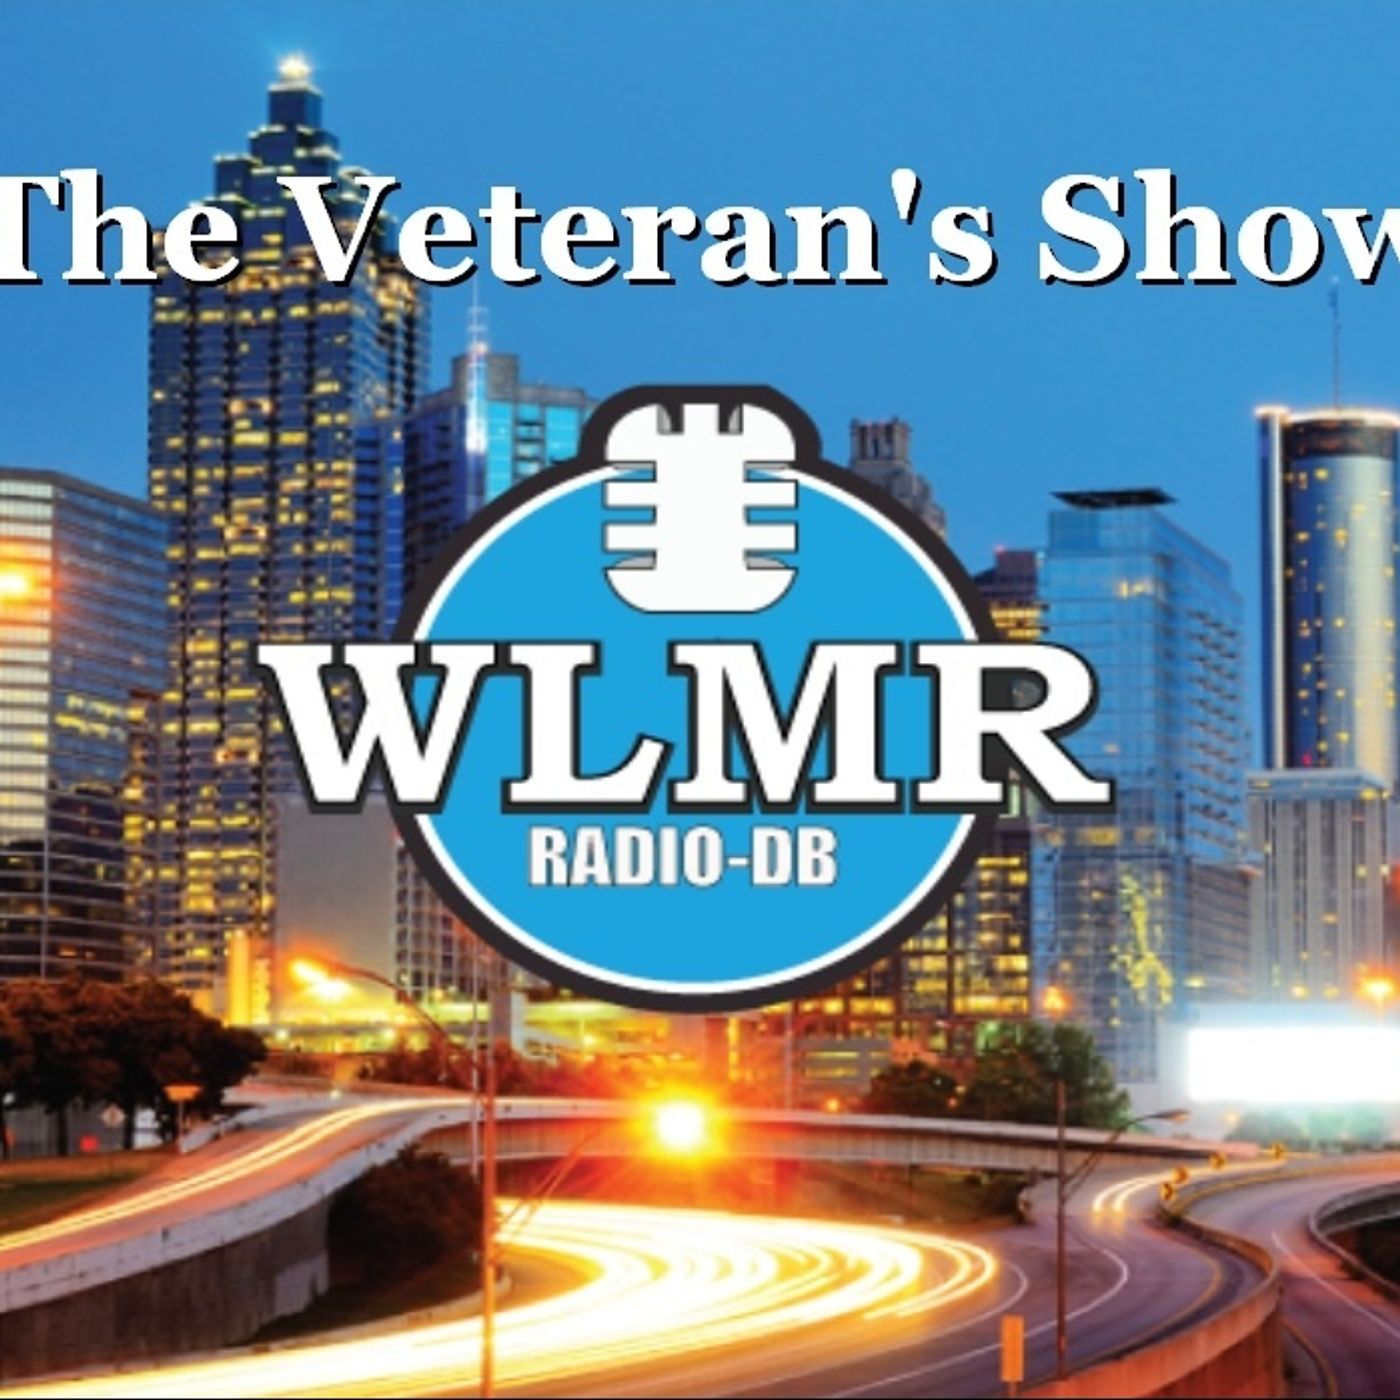 WLMR-DB Radio - The Veteran's Show